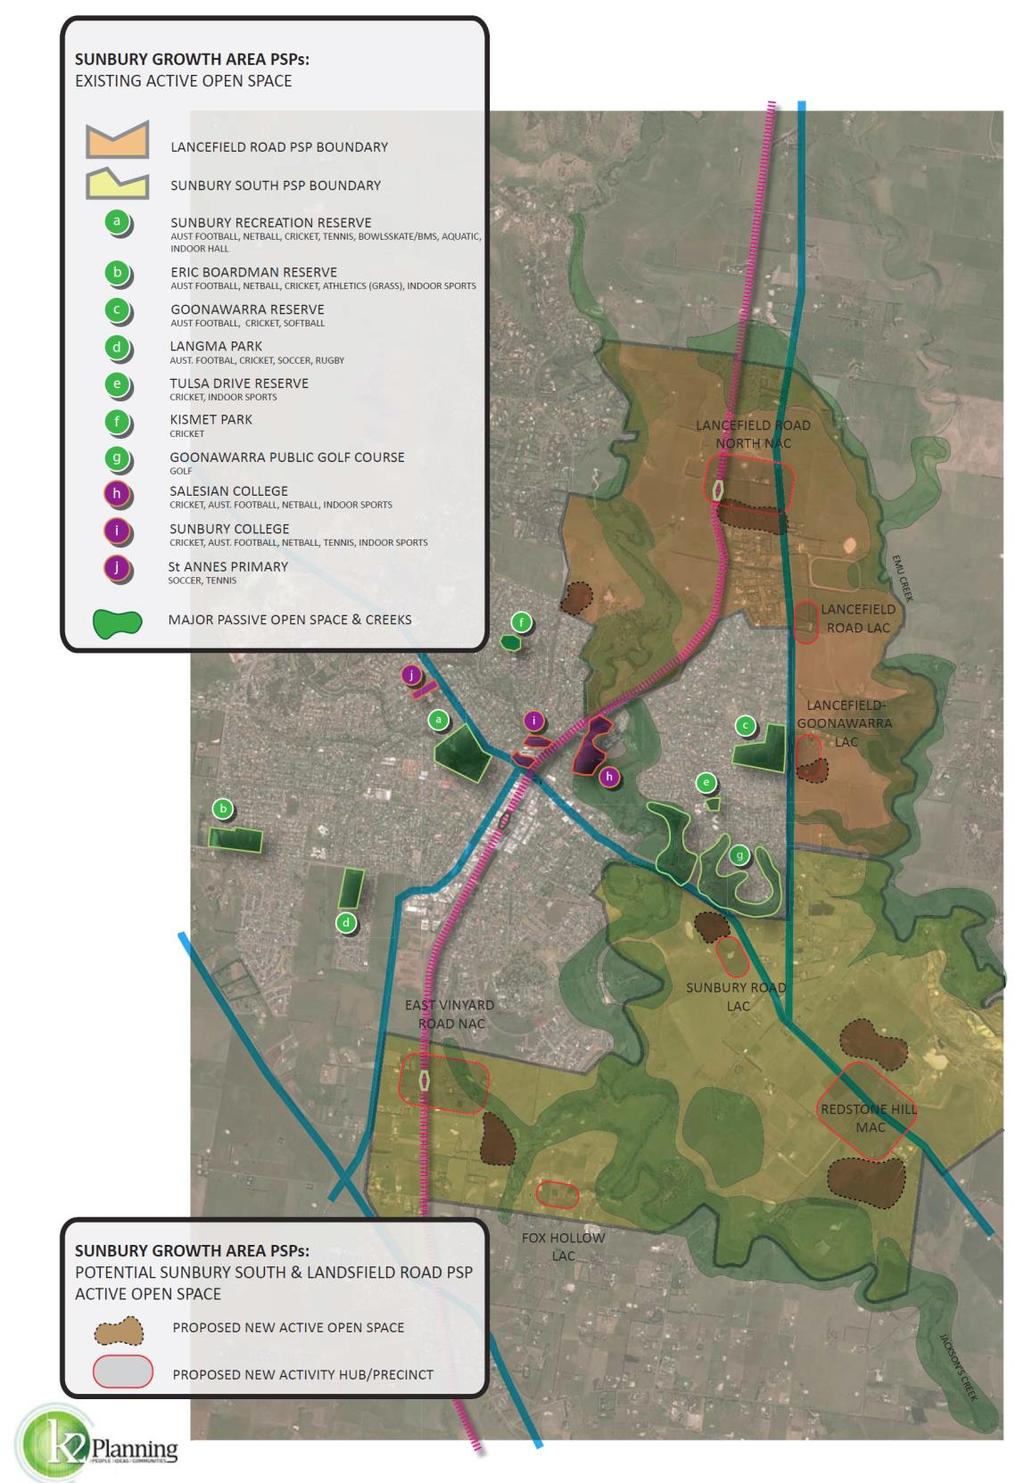 Figure 4: Existing Active Open Space in Sunbury SUNBURY SOUTH